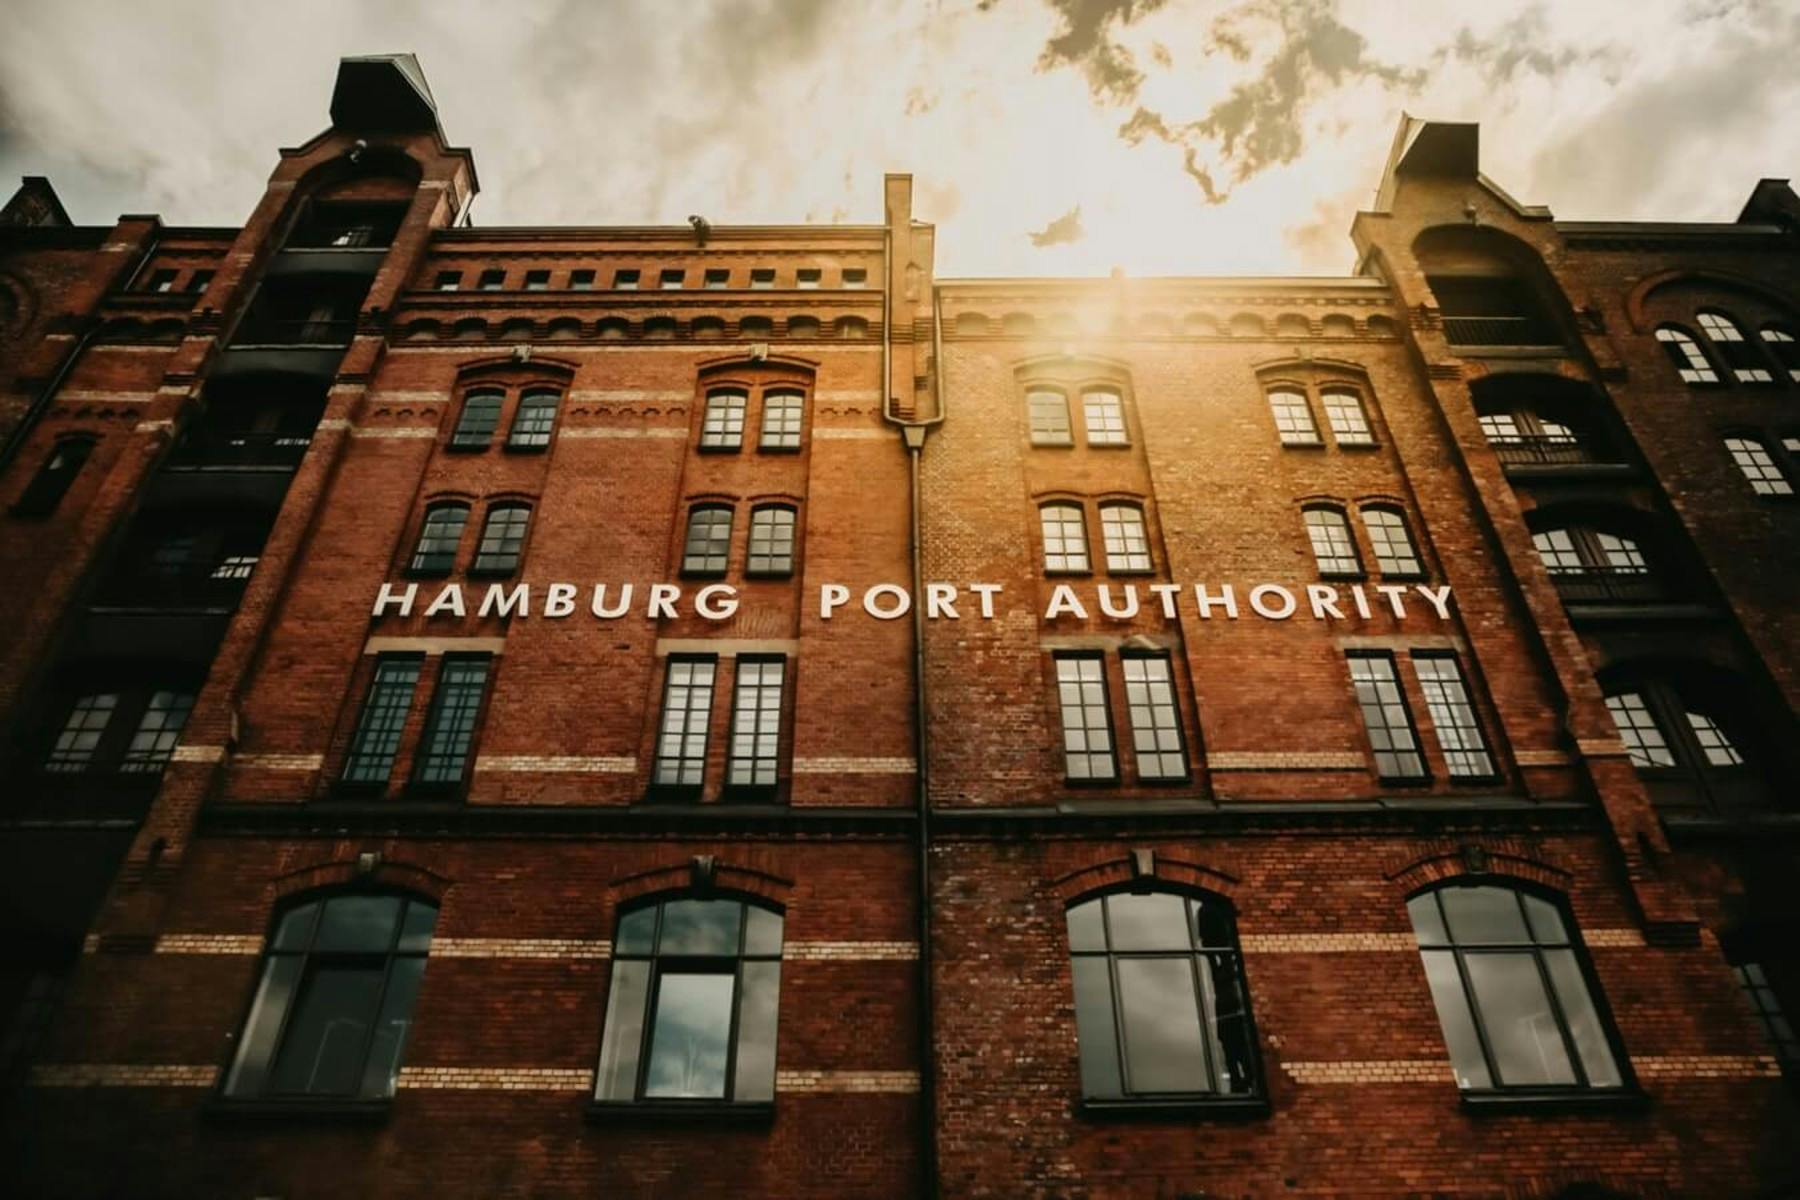 Sightseeing in Hamburg: The Hafencity